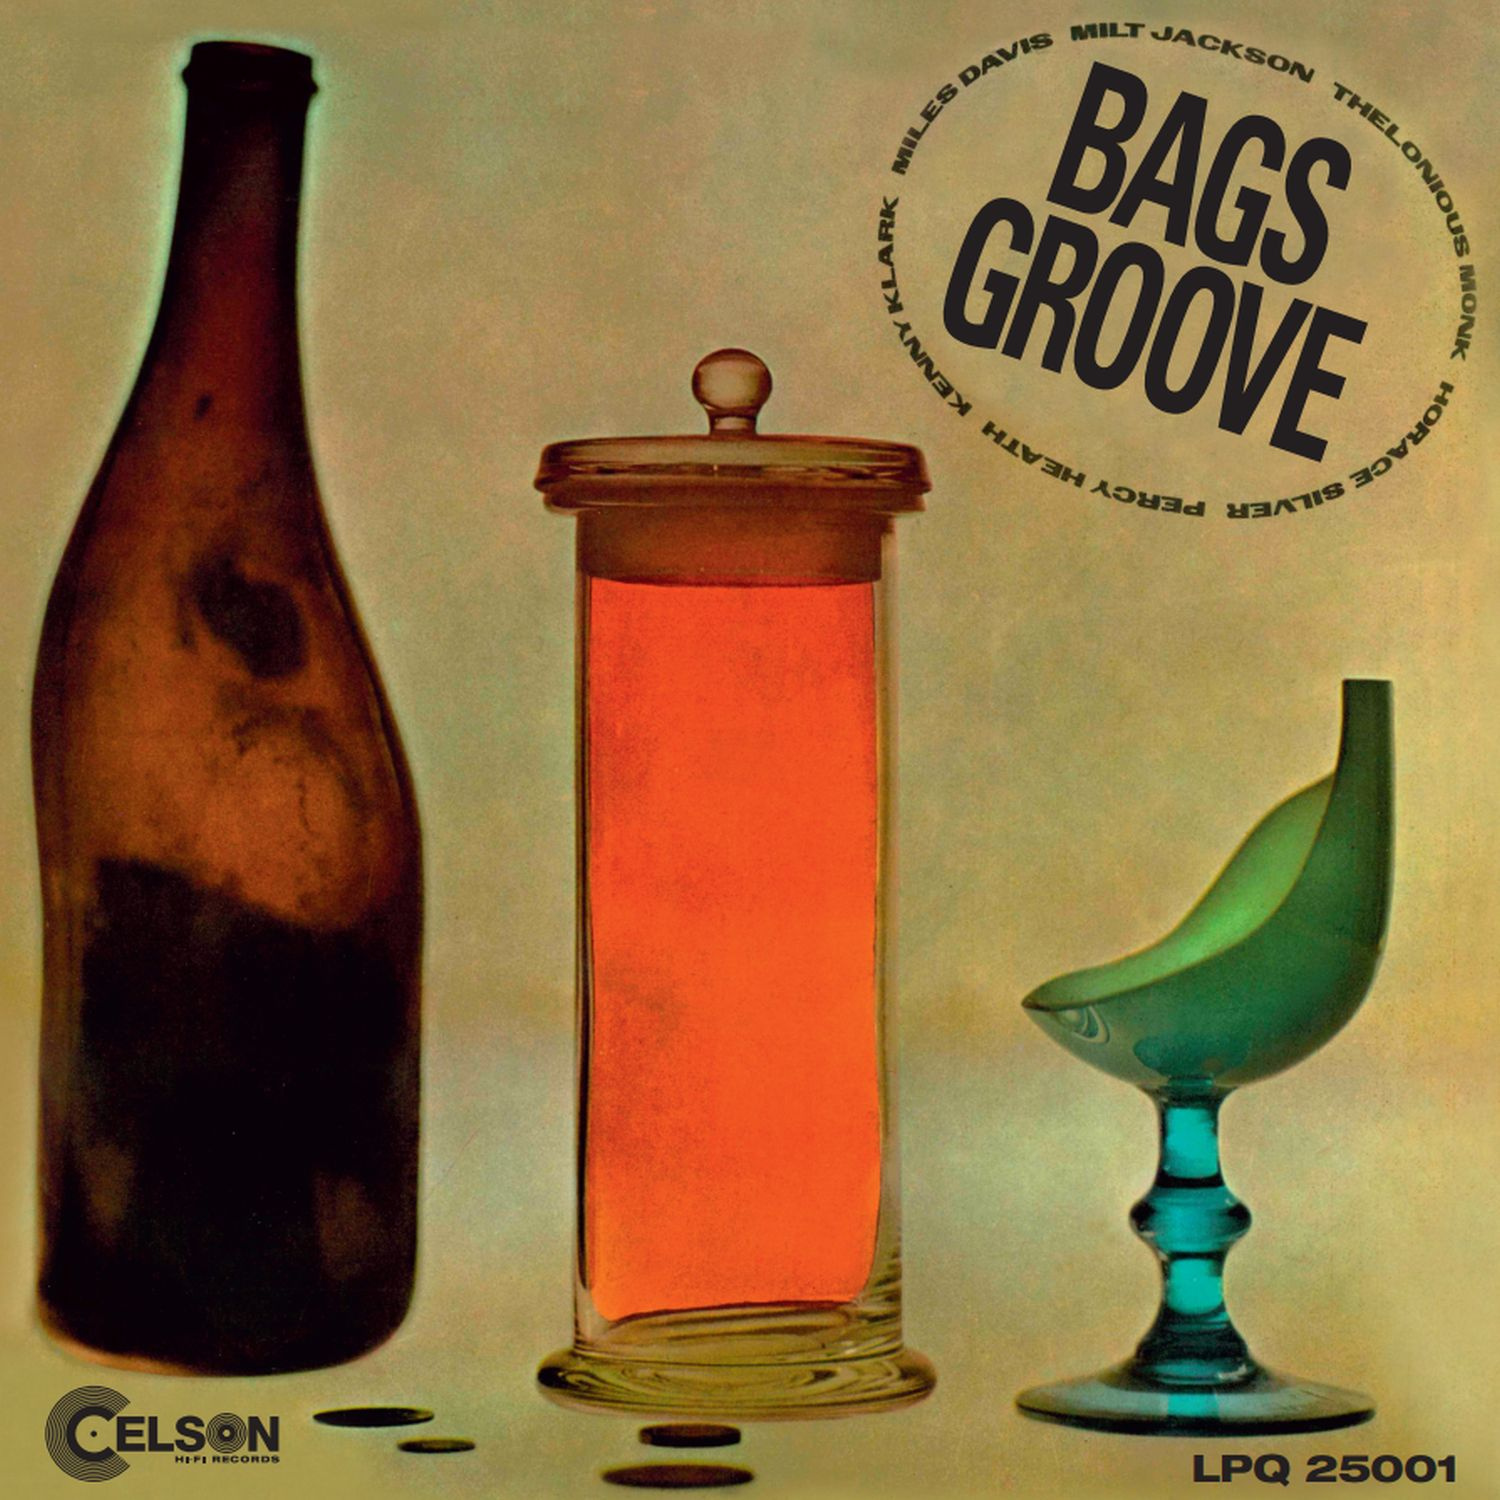 BAGS GROOVE - LP 180 GR. BLACK VINYL MONO REC. ORIGINAL MASTER